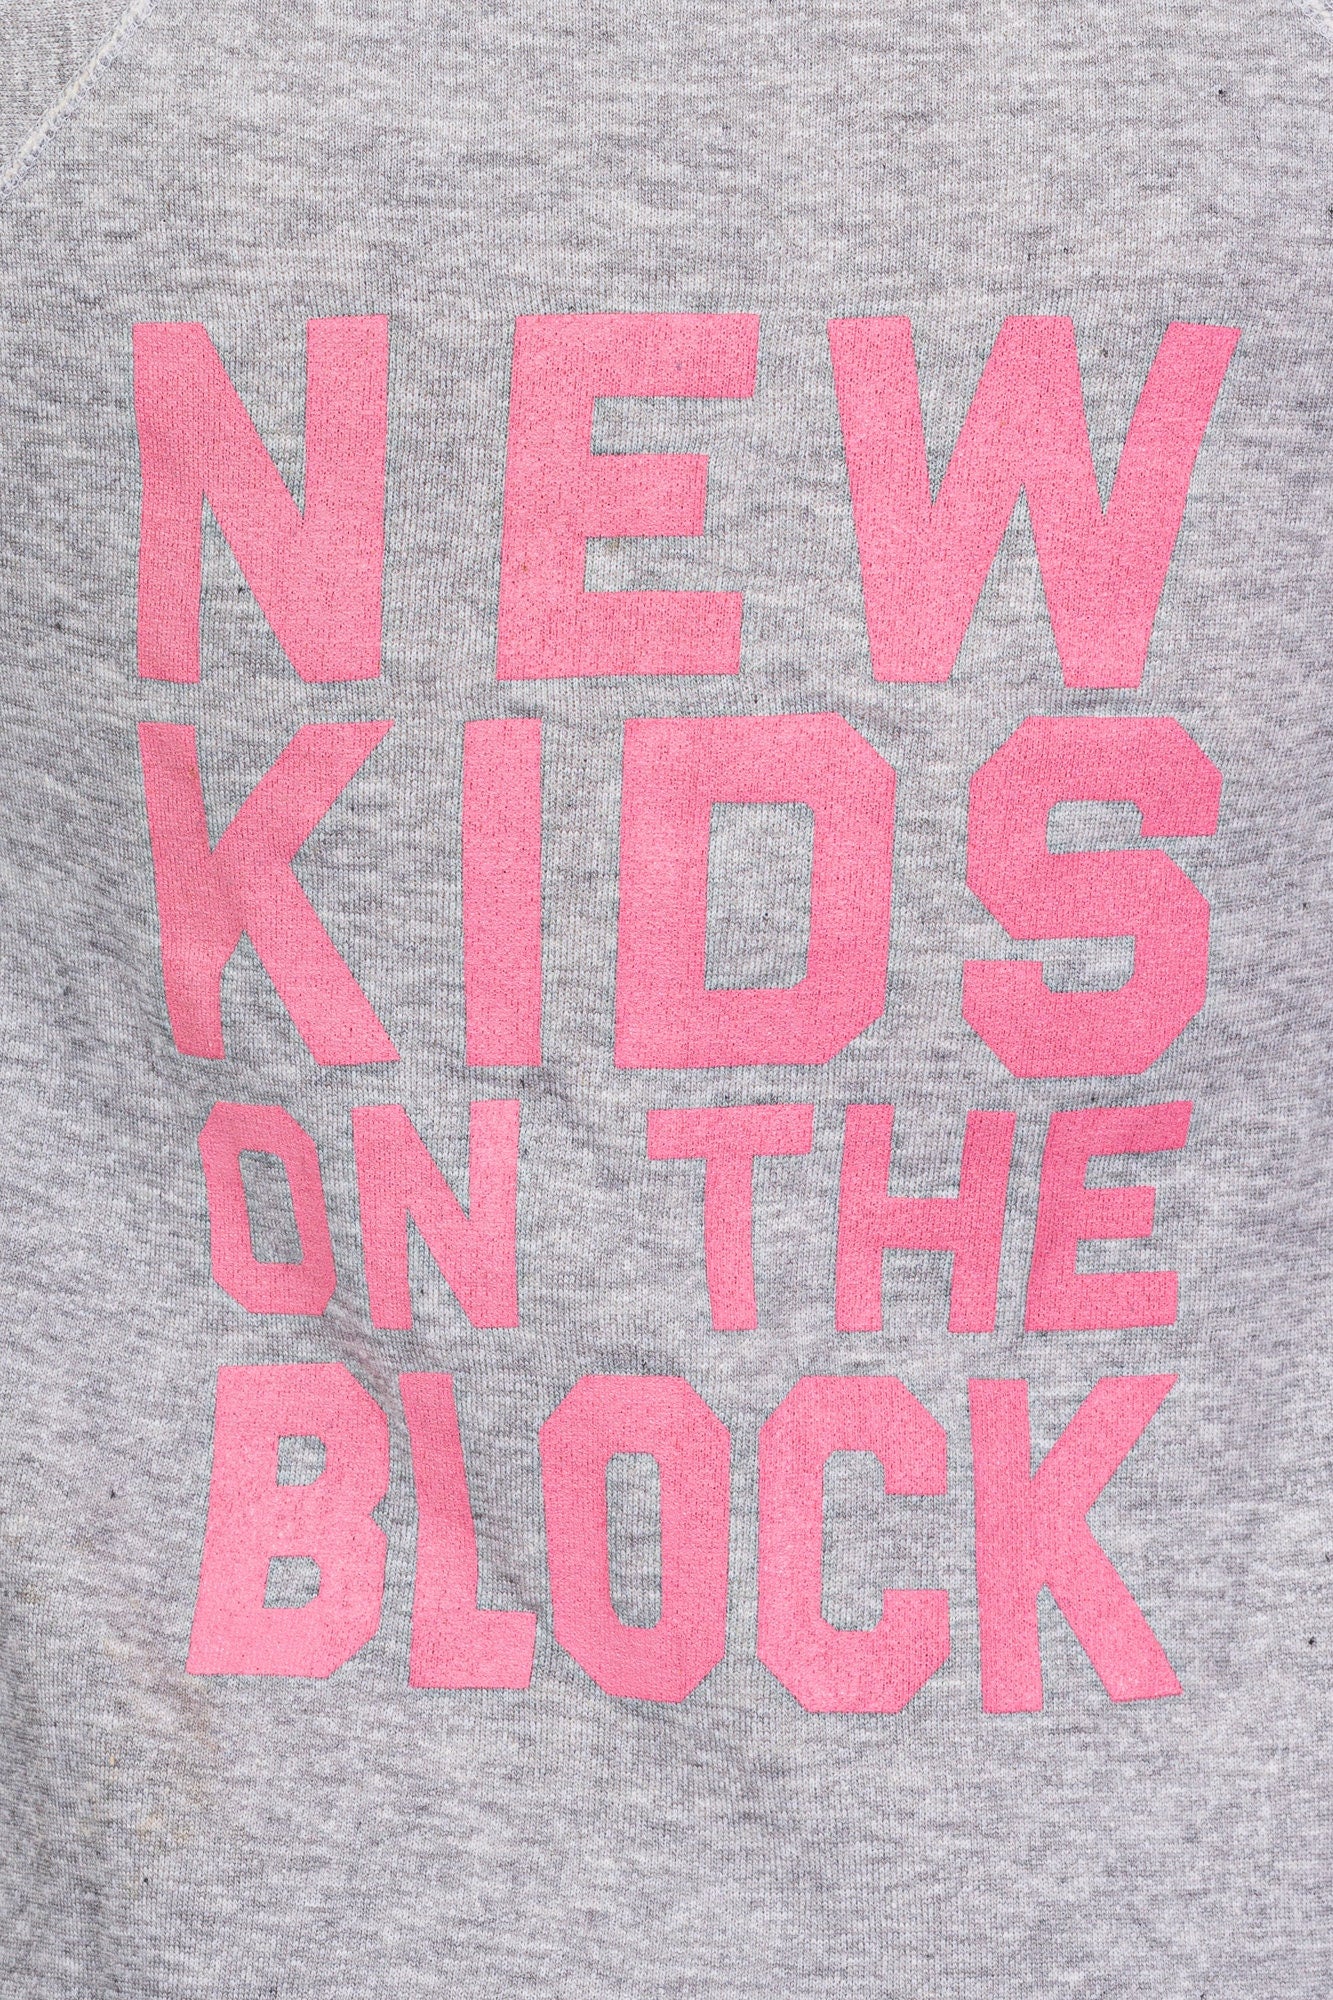 80s New Kids On The Block Sweatshirt - Men's Small, Women's Medium 